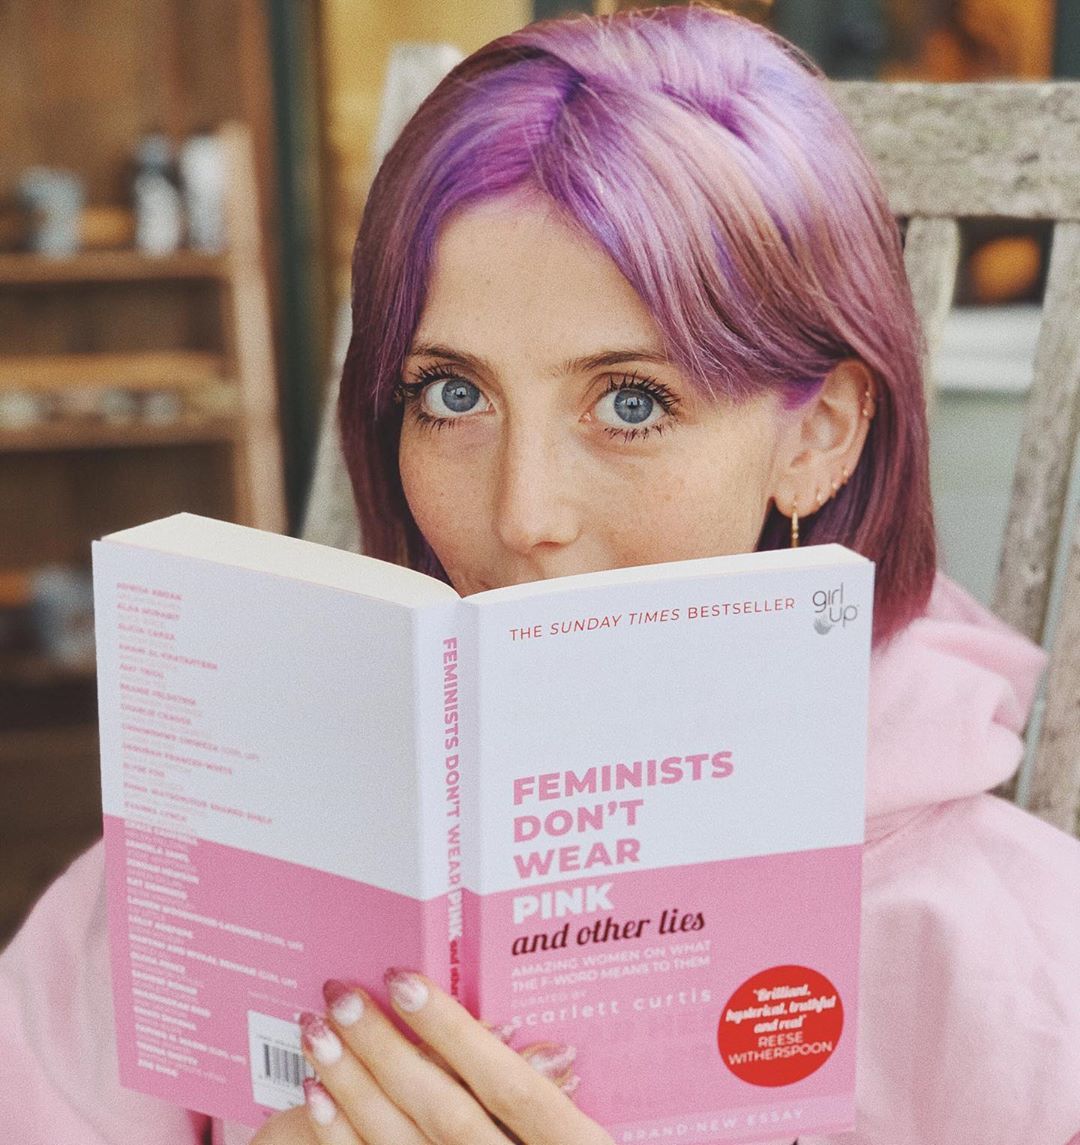 Scarlett Curtis holding her book “Women Don't Wear Pink”